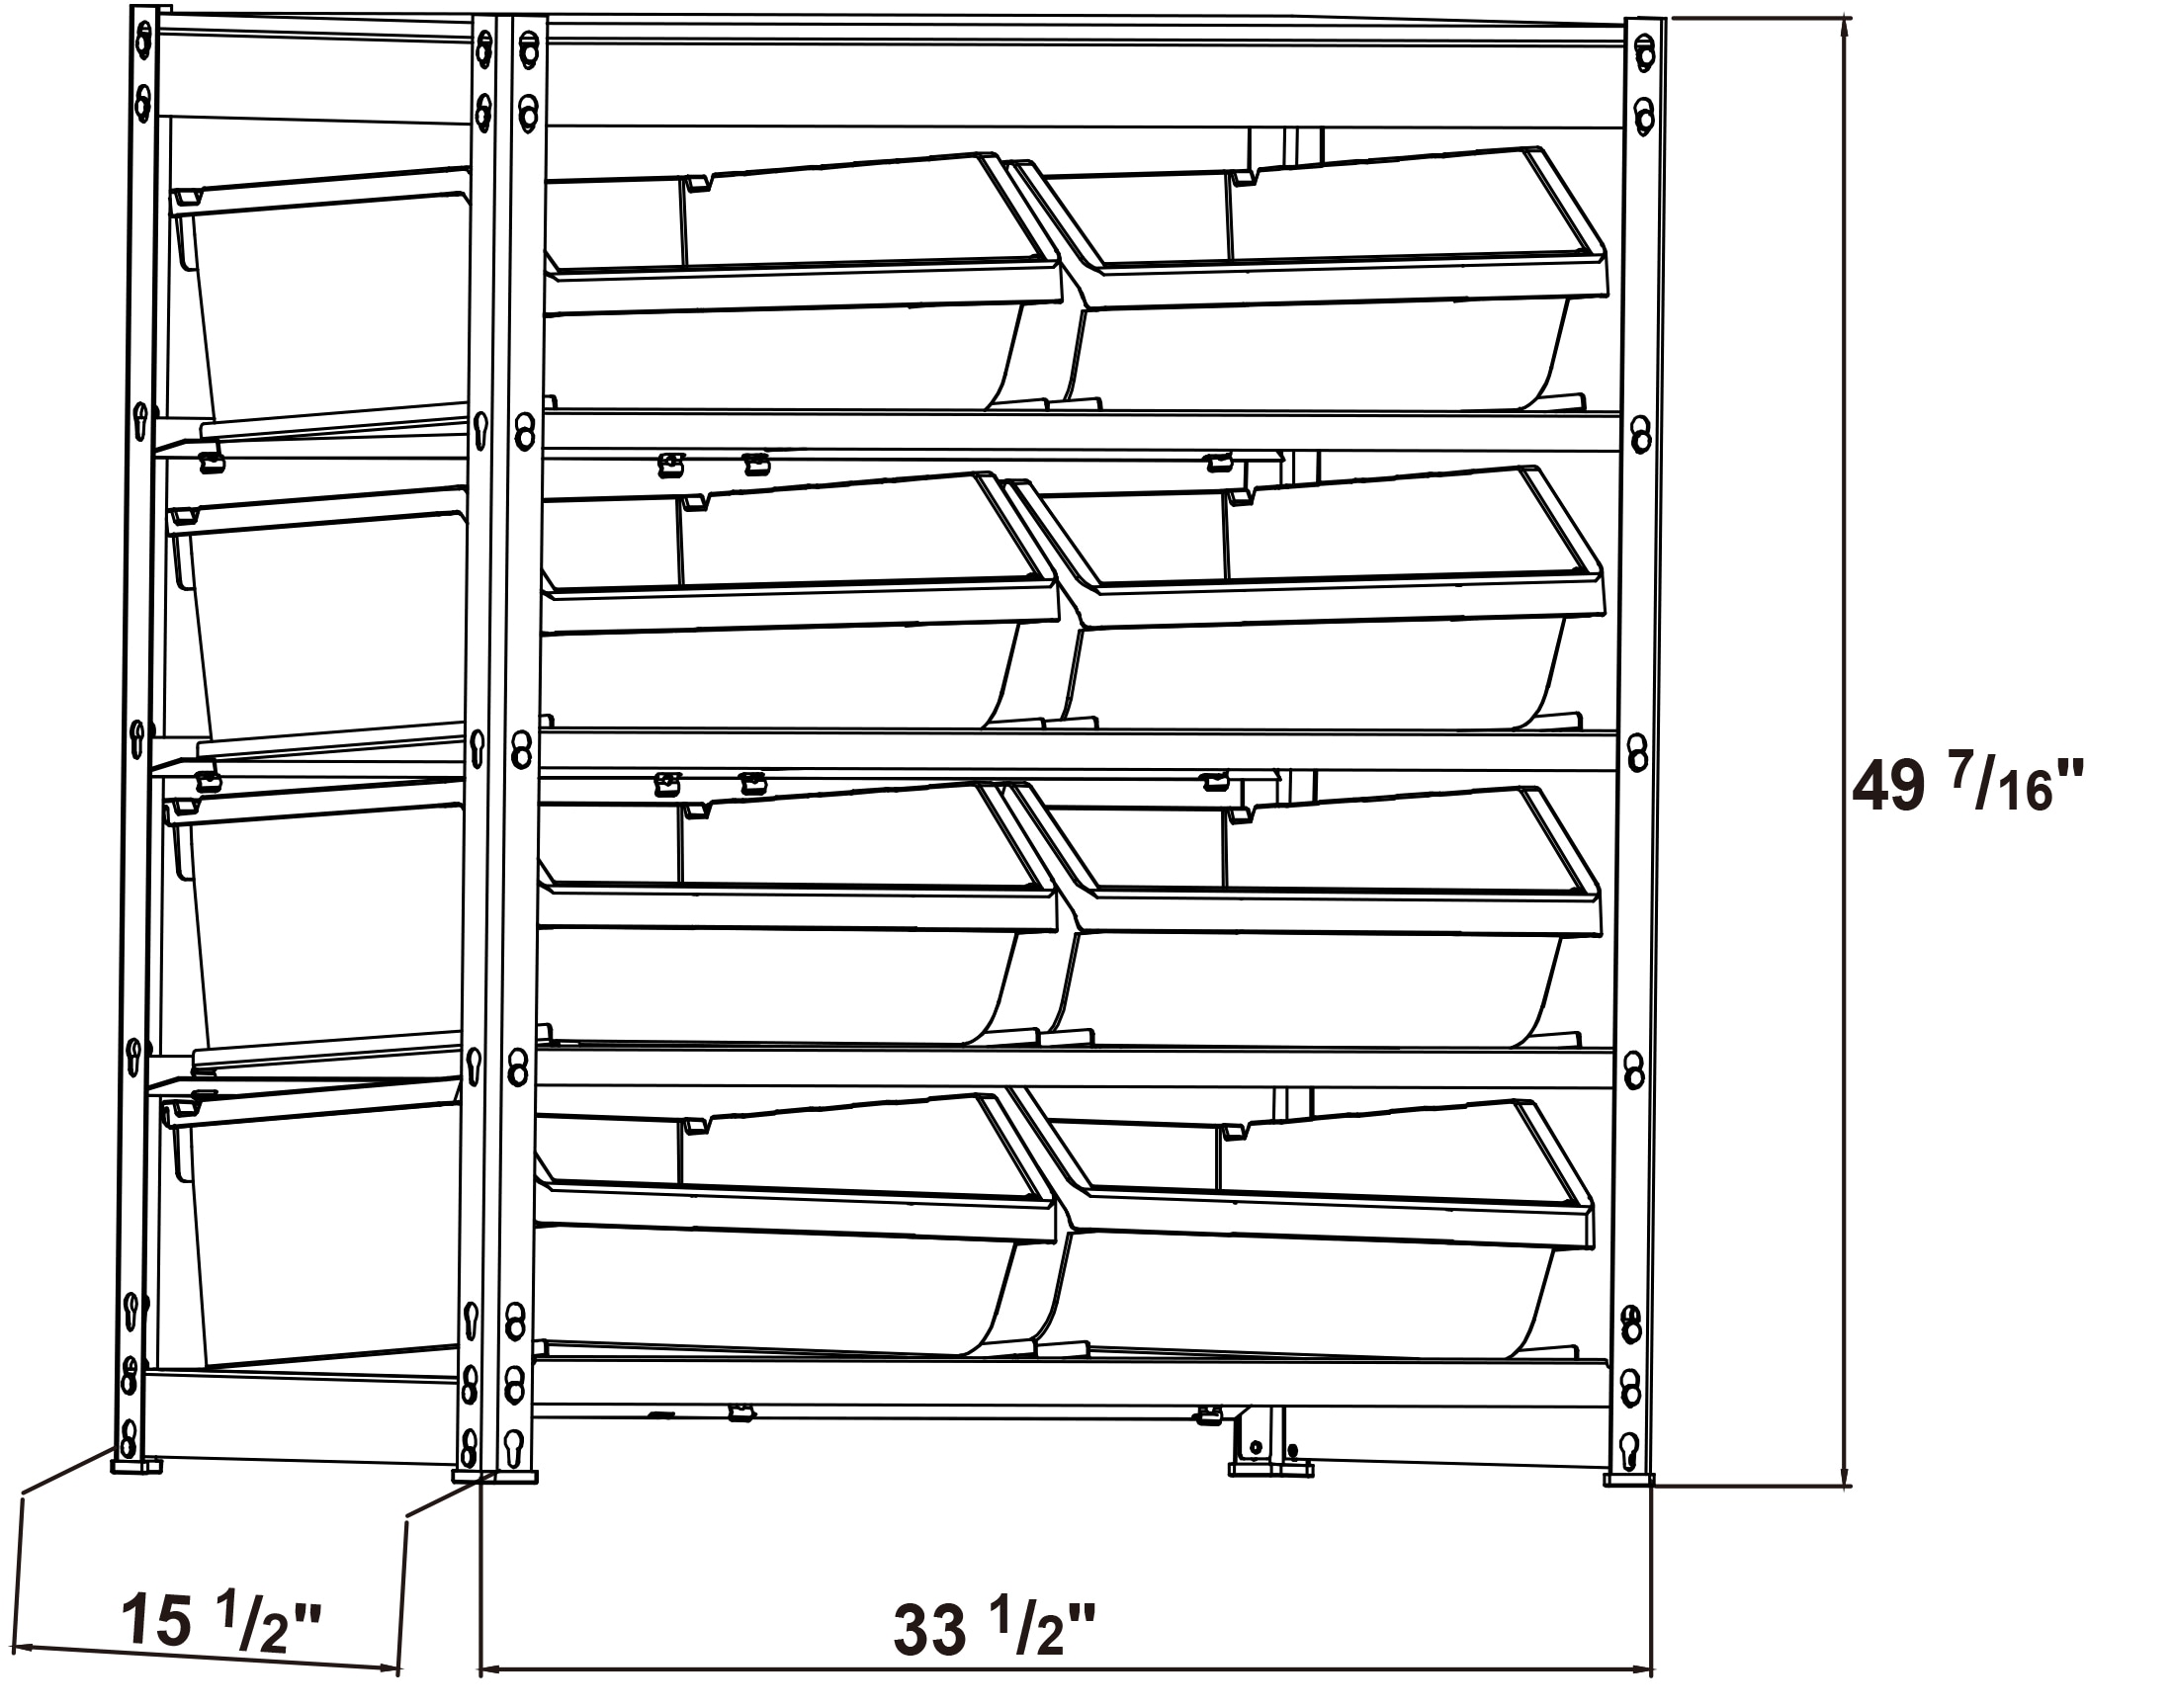 King's Rack Gray 4-Tier Boltless Bin Storage Shelving System Garage Storage Rack (12 Plastic Bins in 4 Tier) GT0908